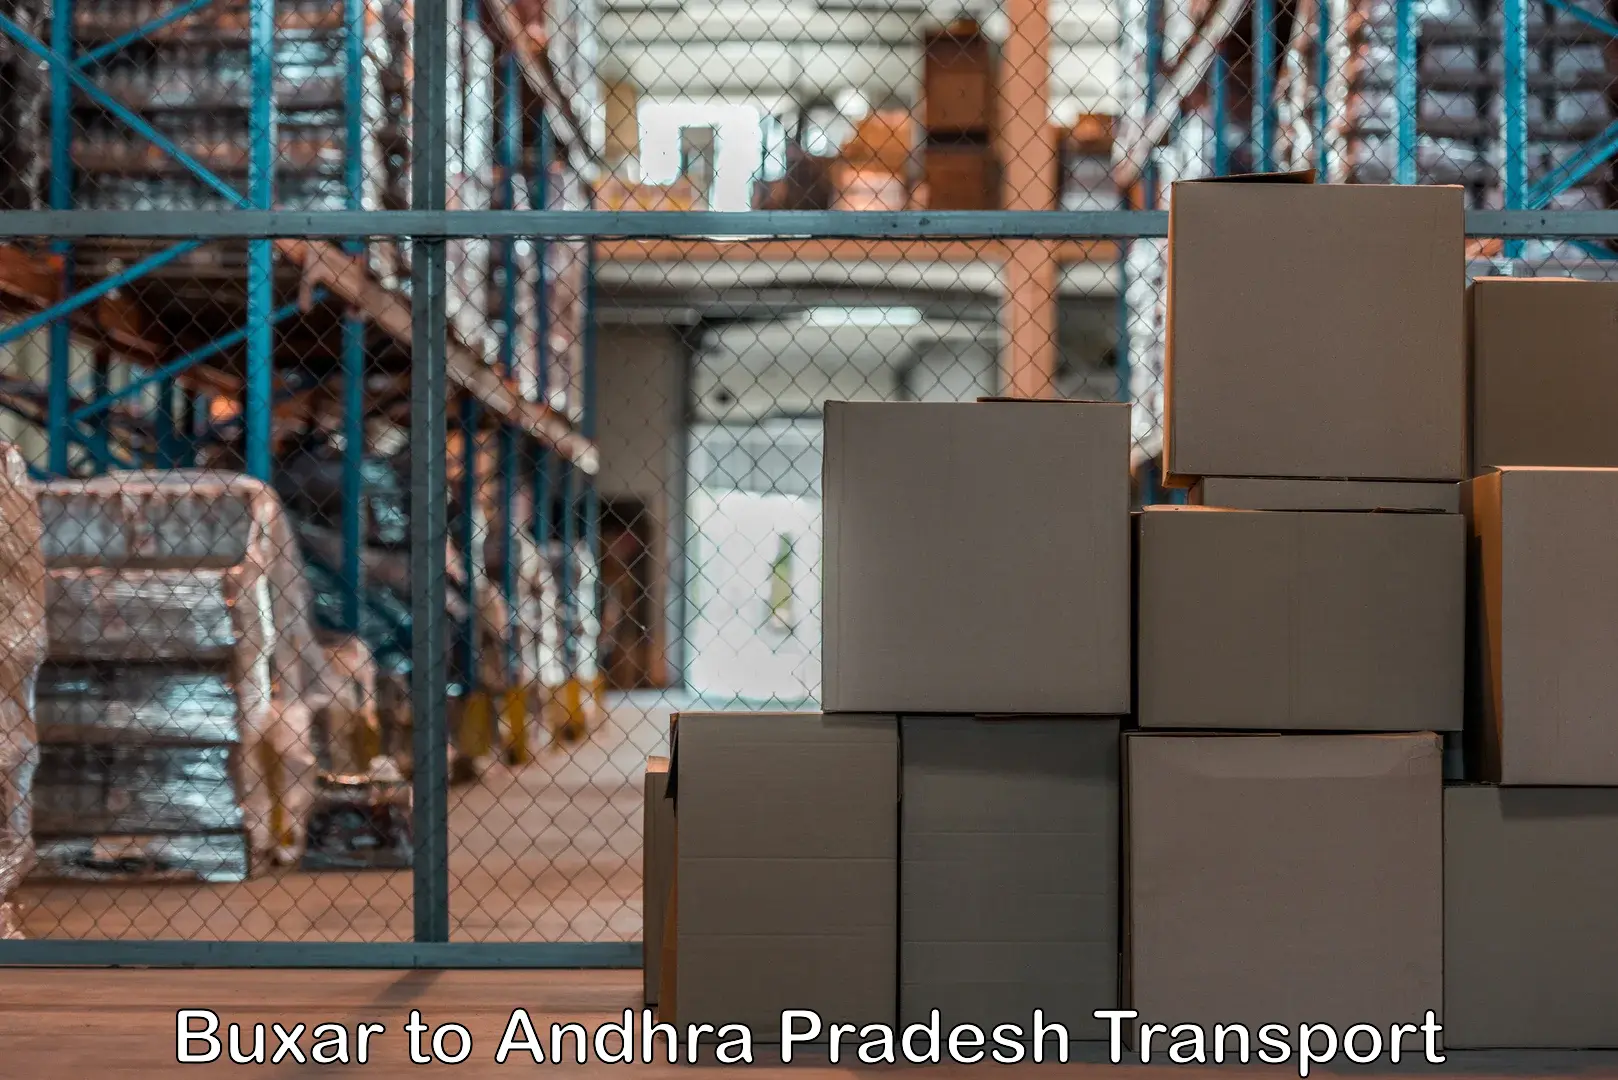 Truck transport companies in India Buxar to Andhra Pradesh